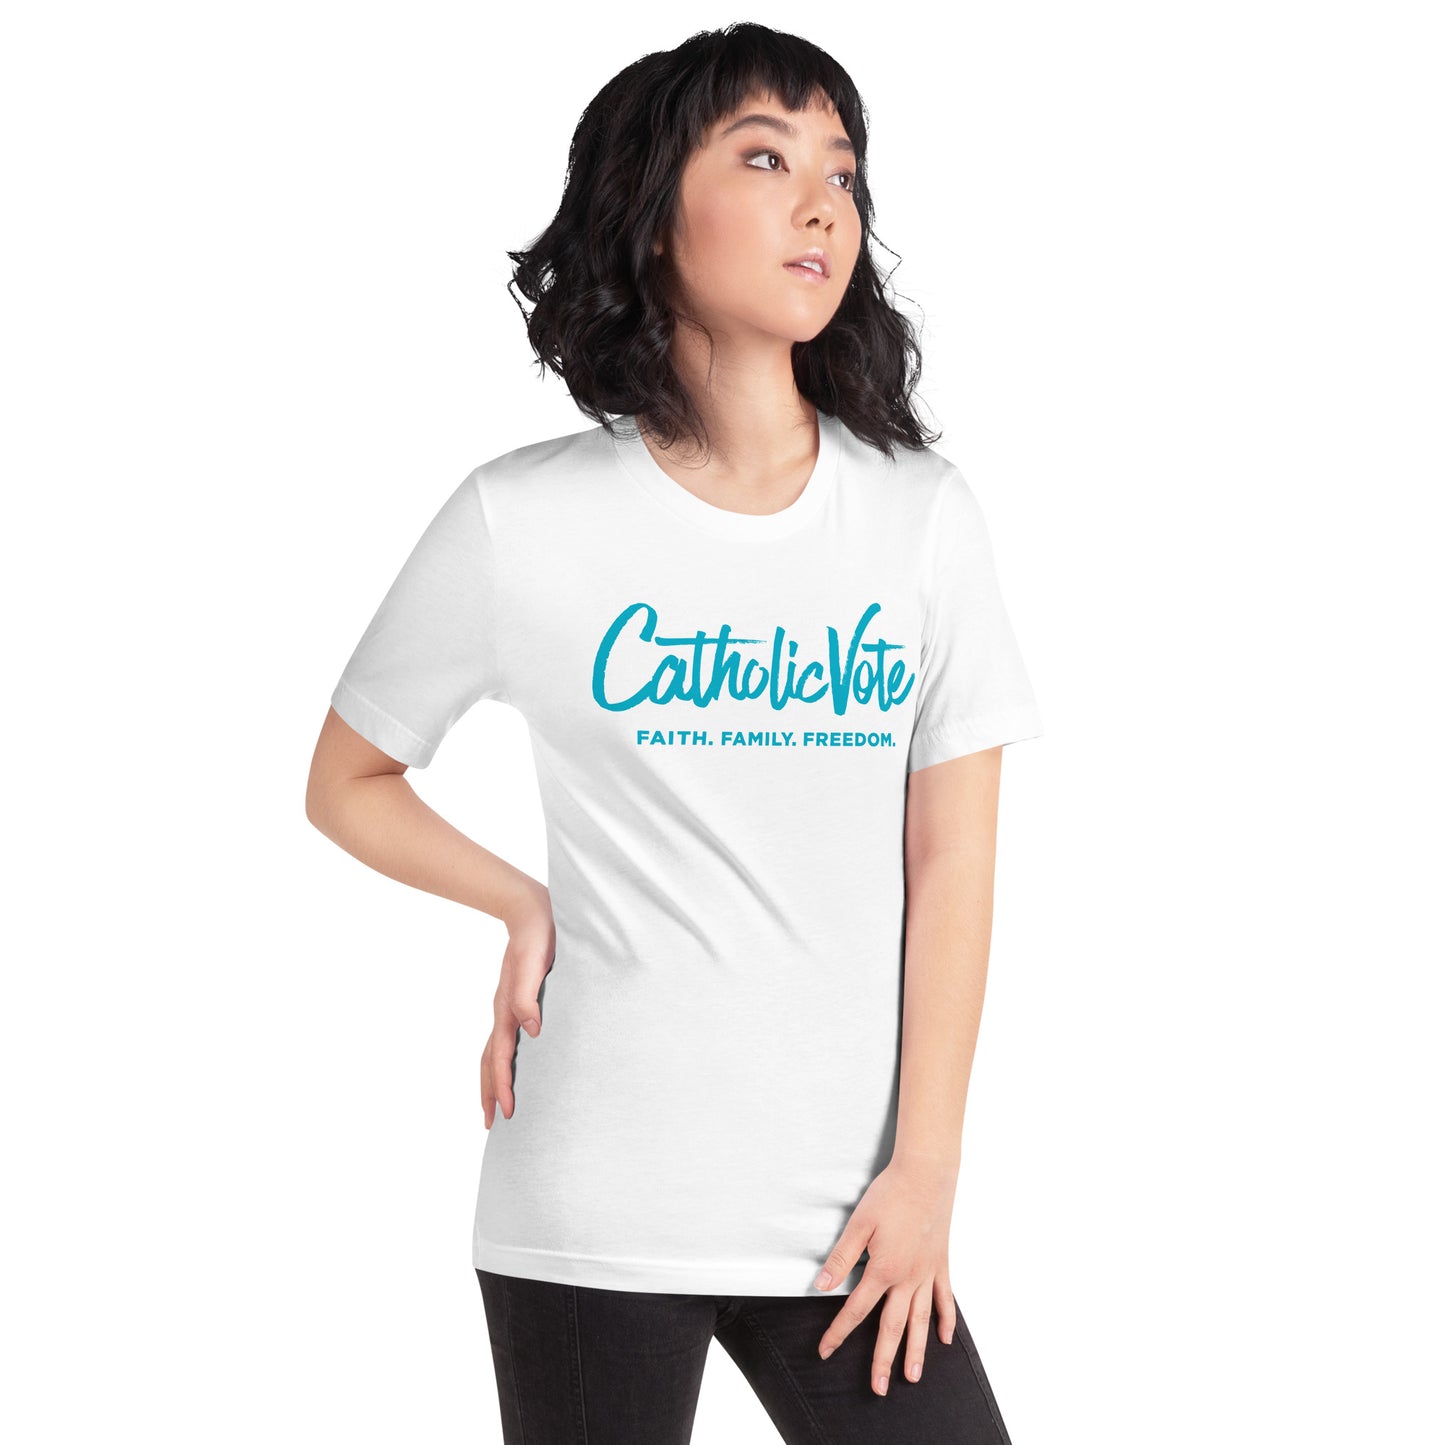 CatholicVote Classic T-shirt